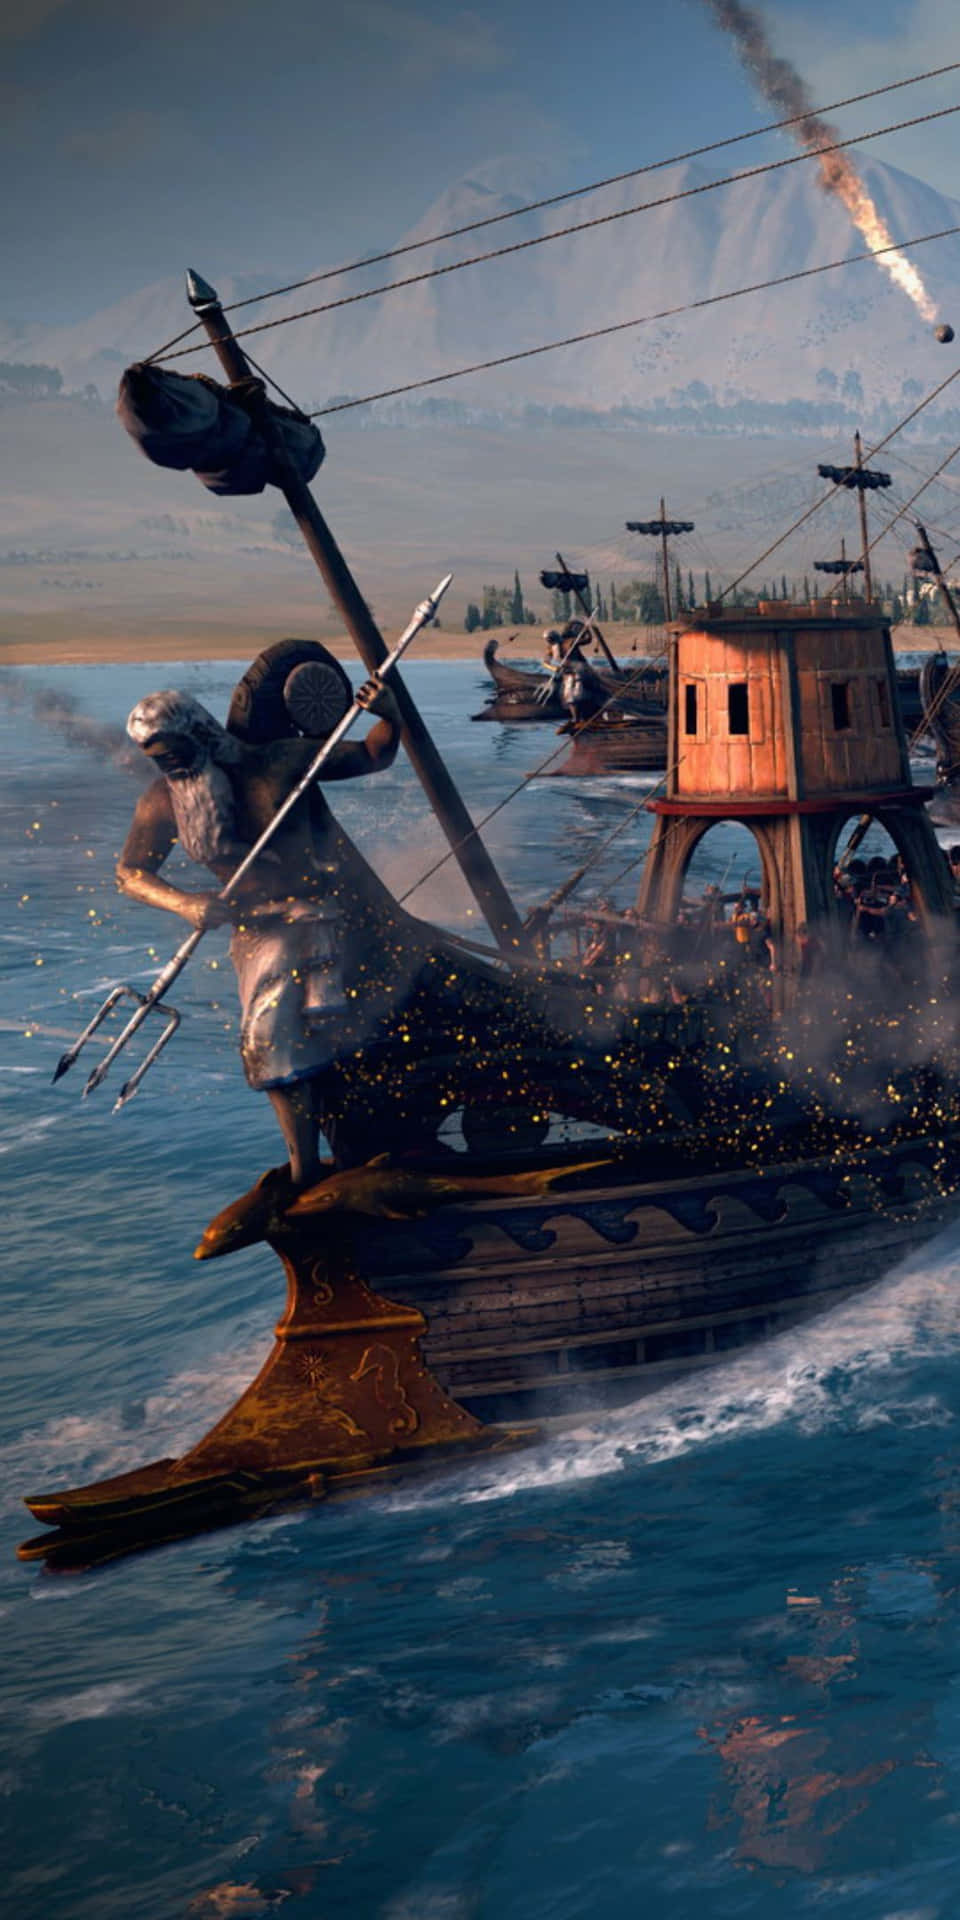 Pixel3 Bakgrundsbild Med Total War Rome 2, Krigsskepp Och Poseidons Staty.